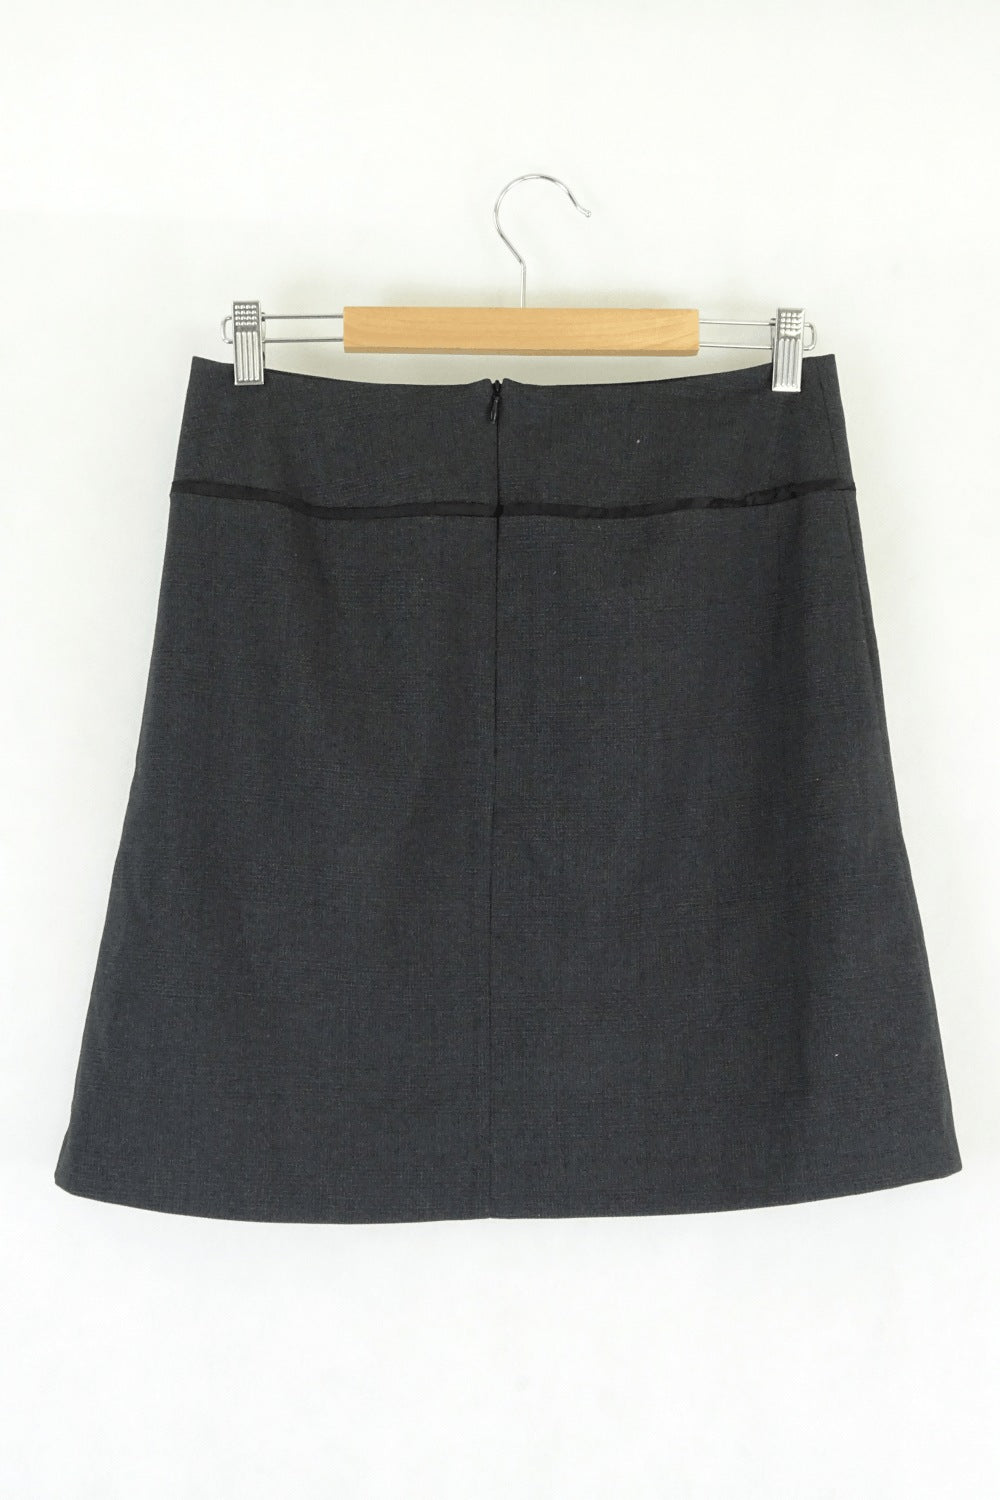 Portmans Grey Skirt 8